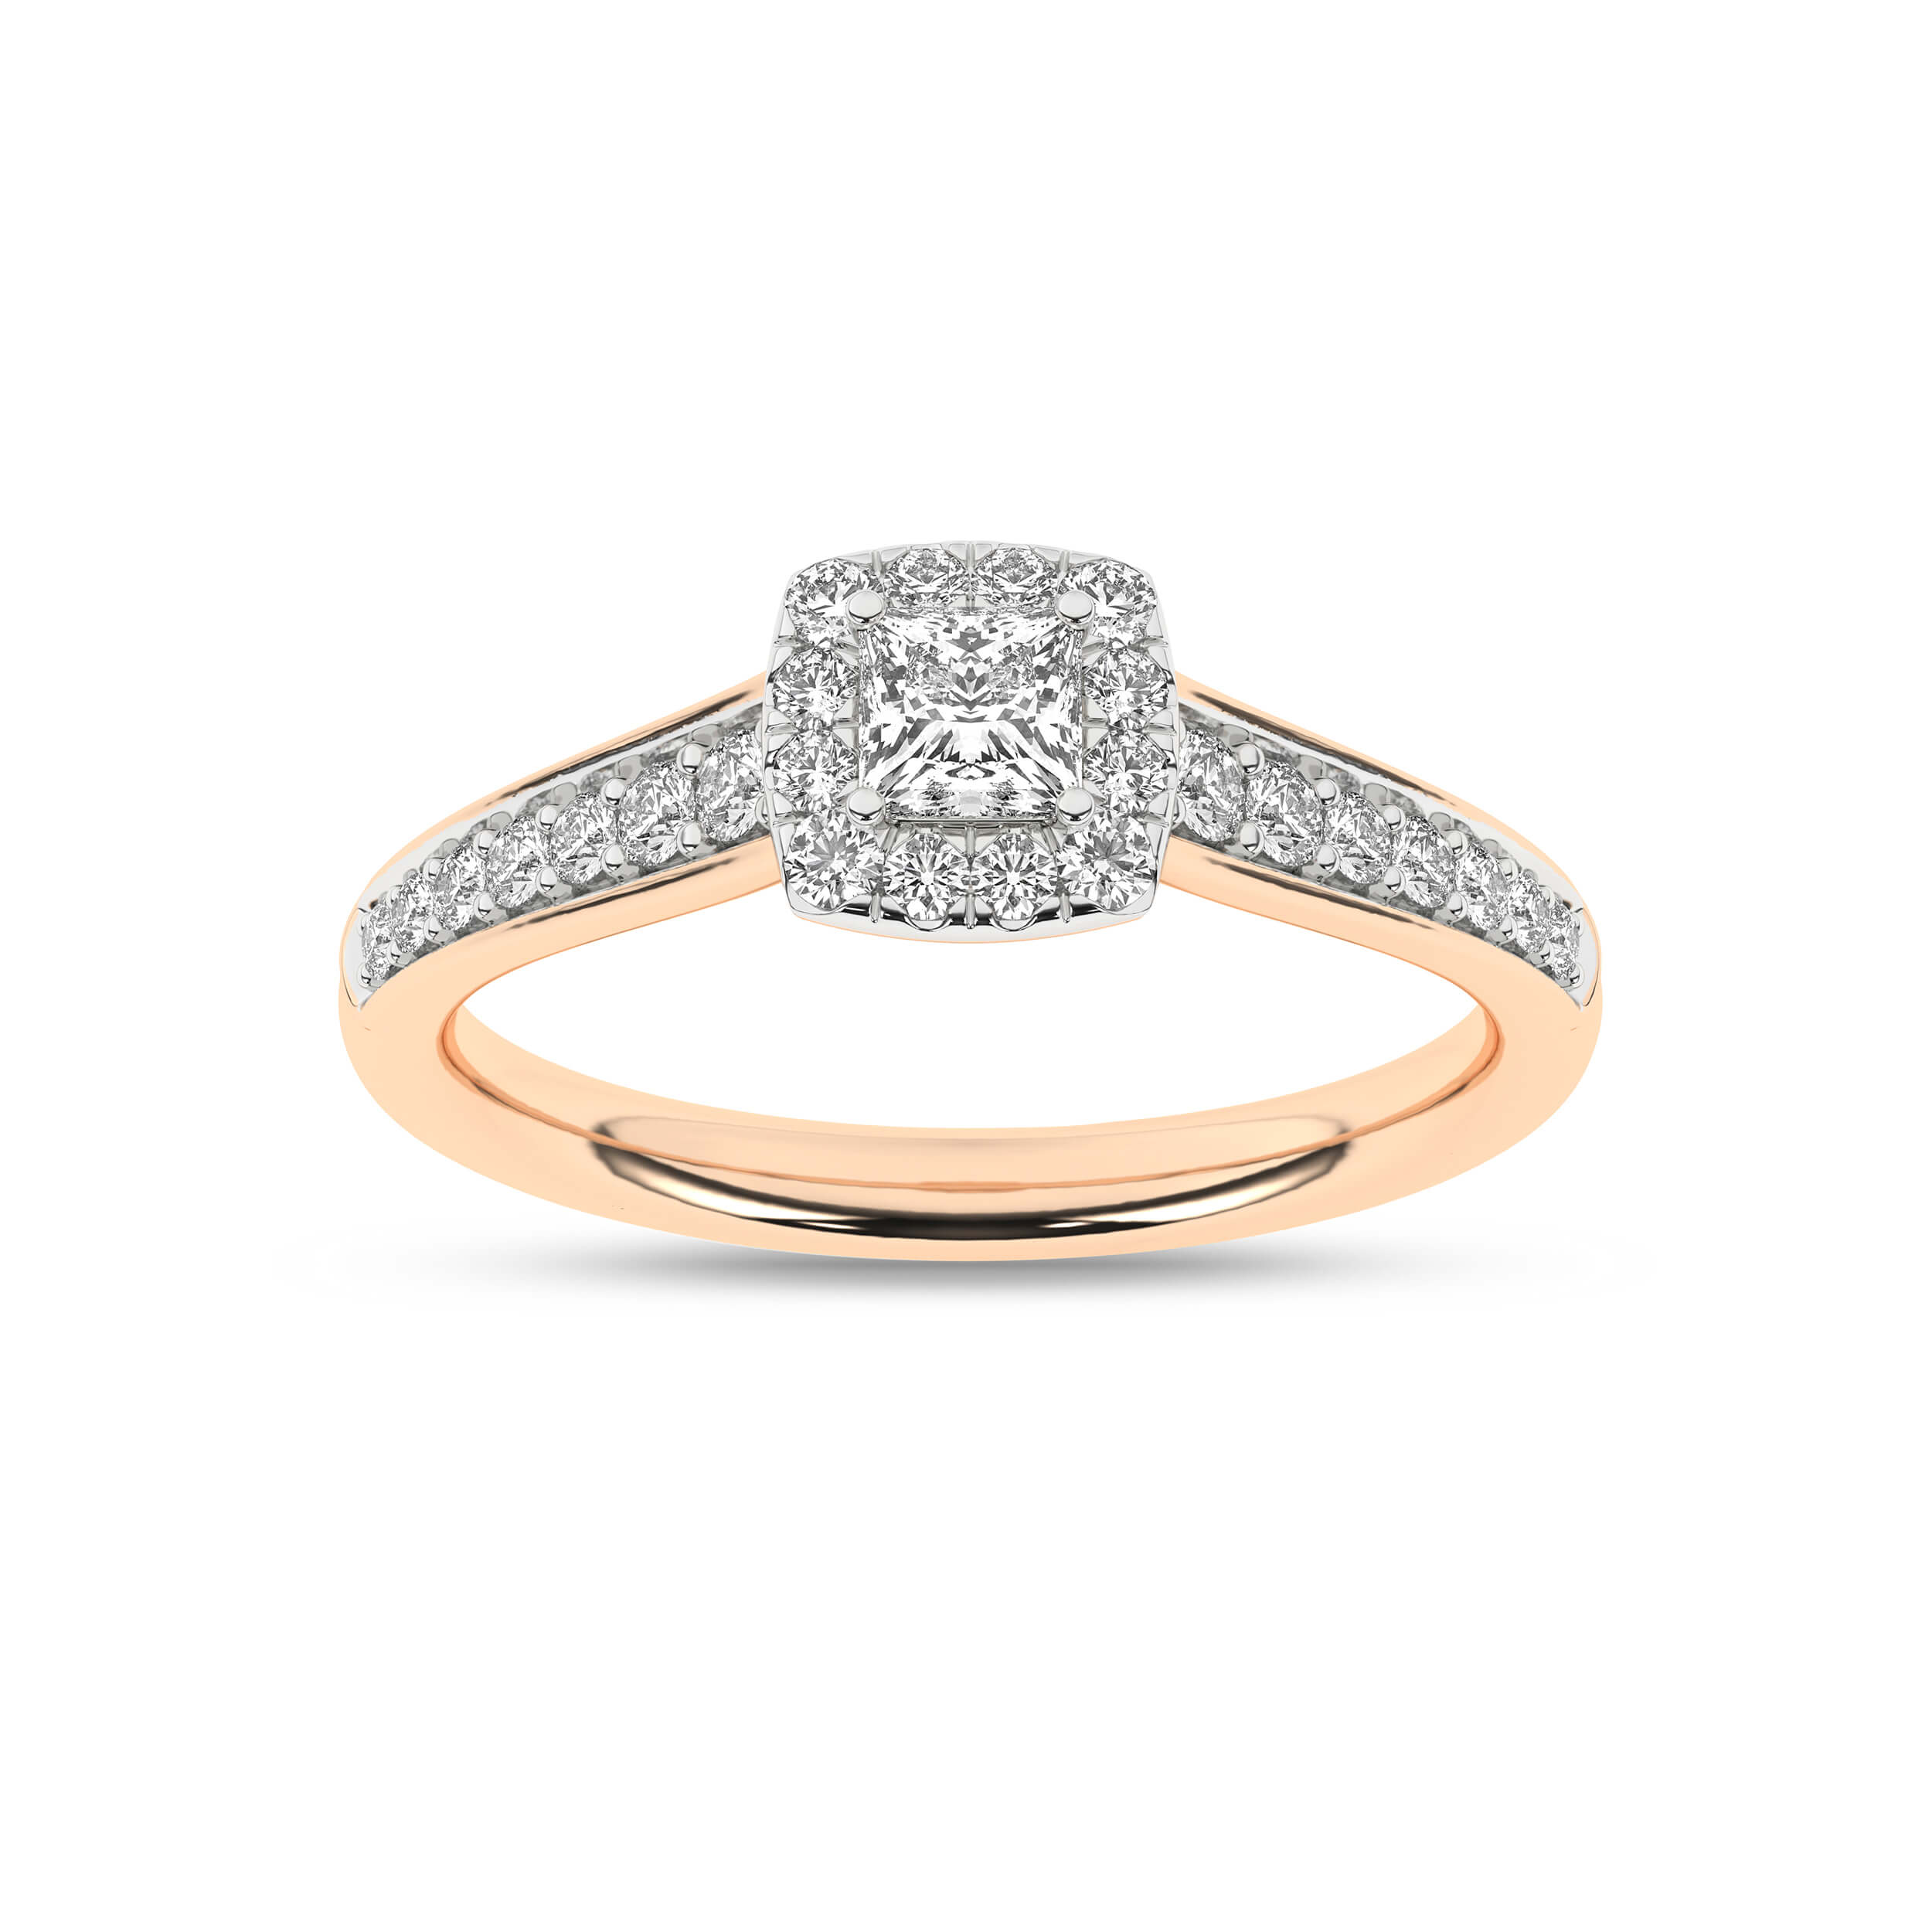 Inel de logodna din Aur Roz 14K cu Diamante 0.50Ct, articol RB17644EG, previzualizare foto 1